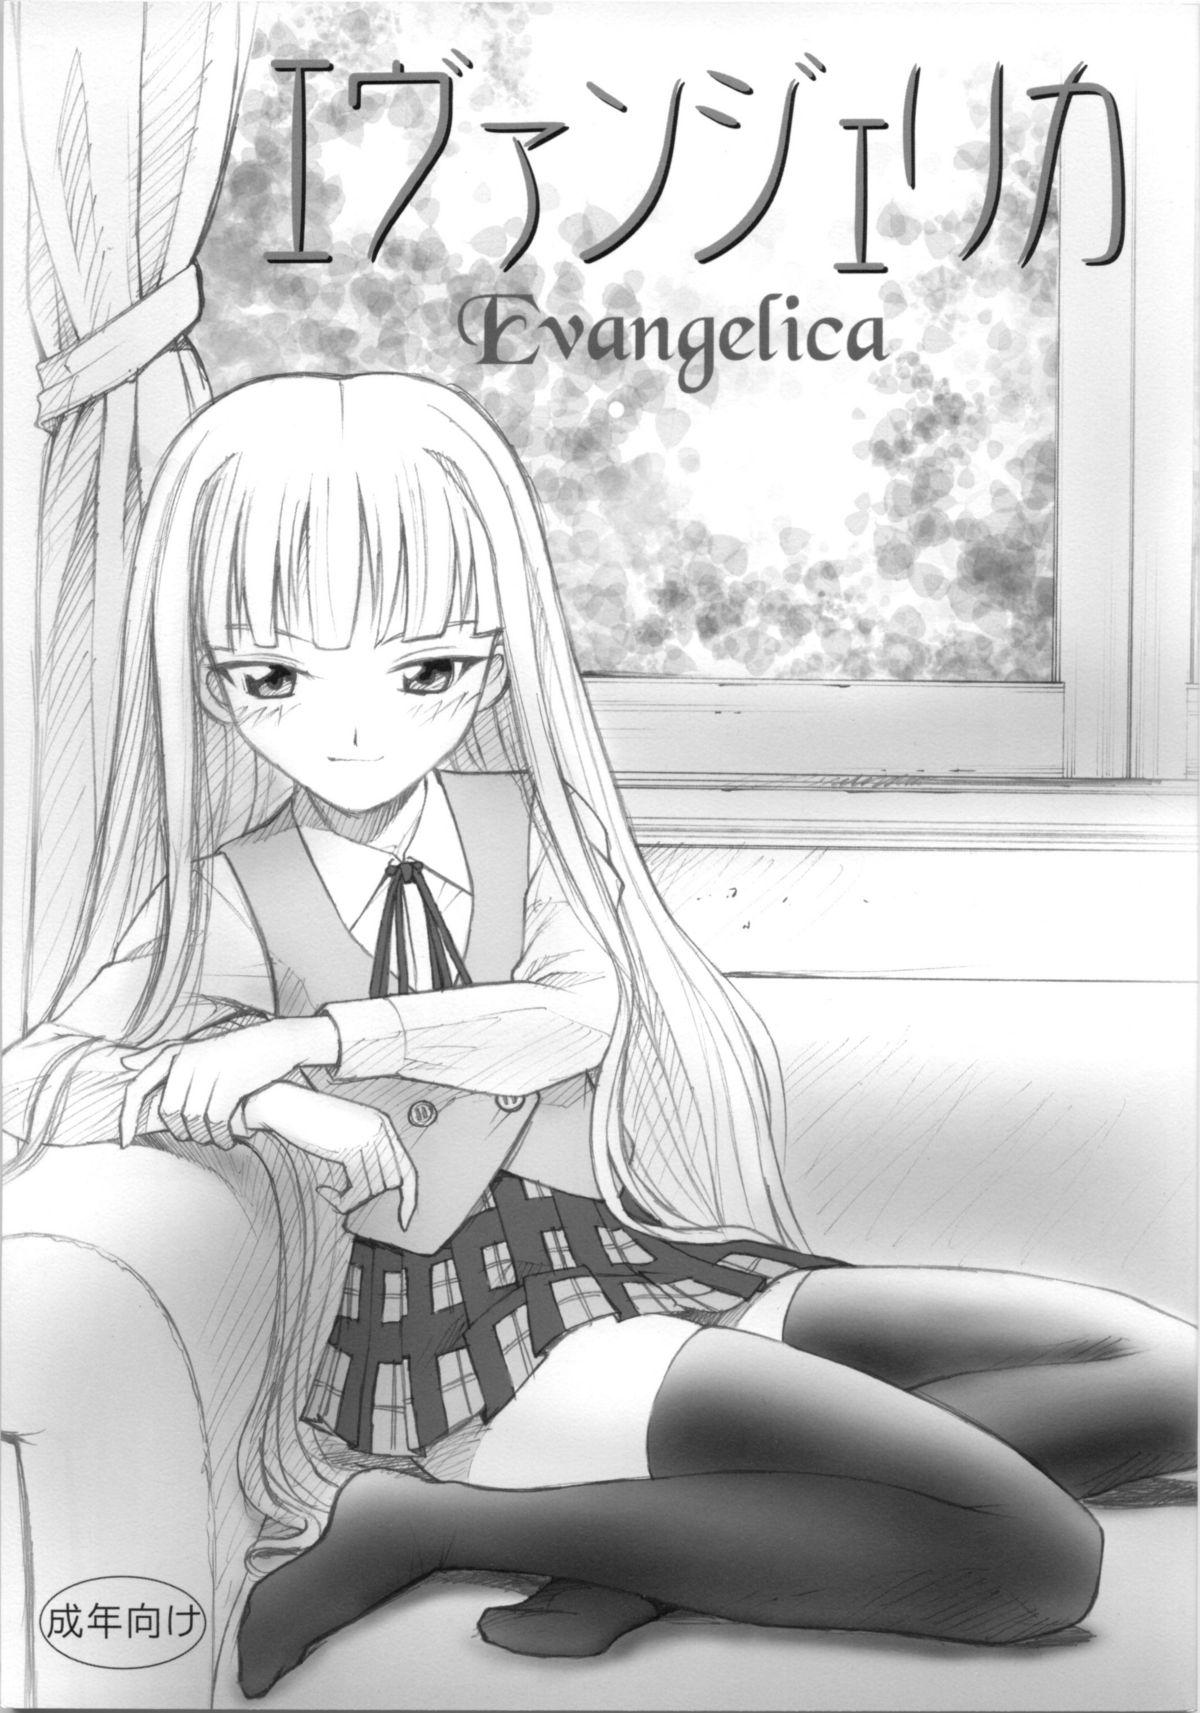 Fucked Evangelica - Mahou sensei negima Freaky - Page 1